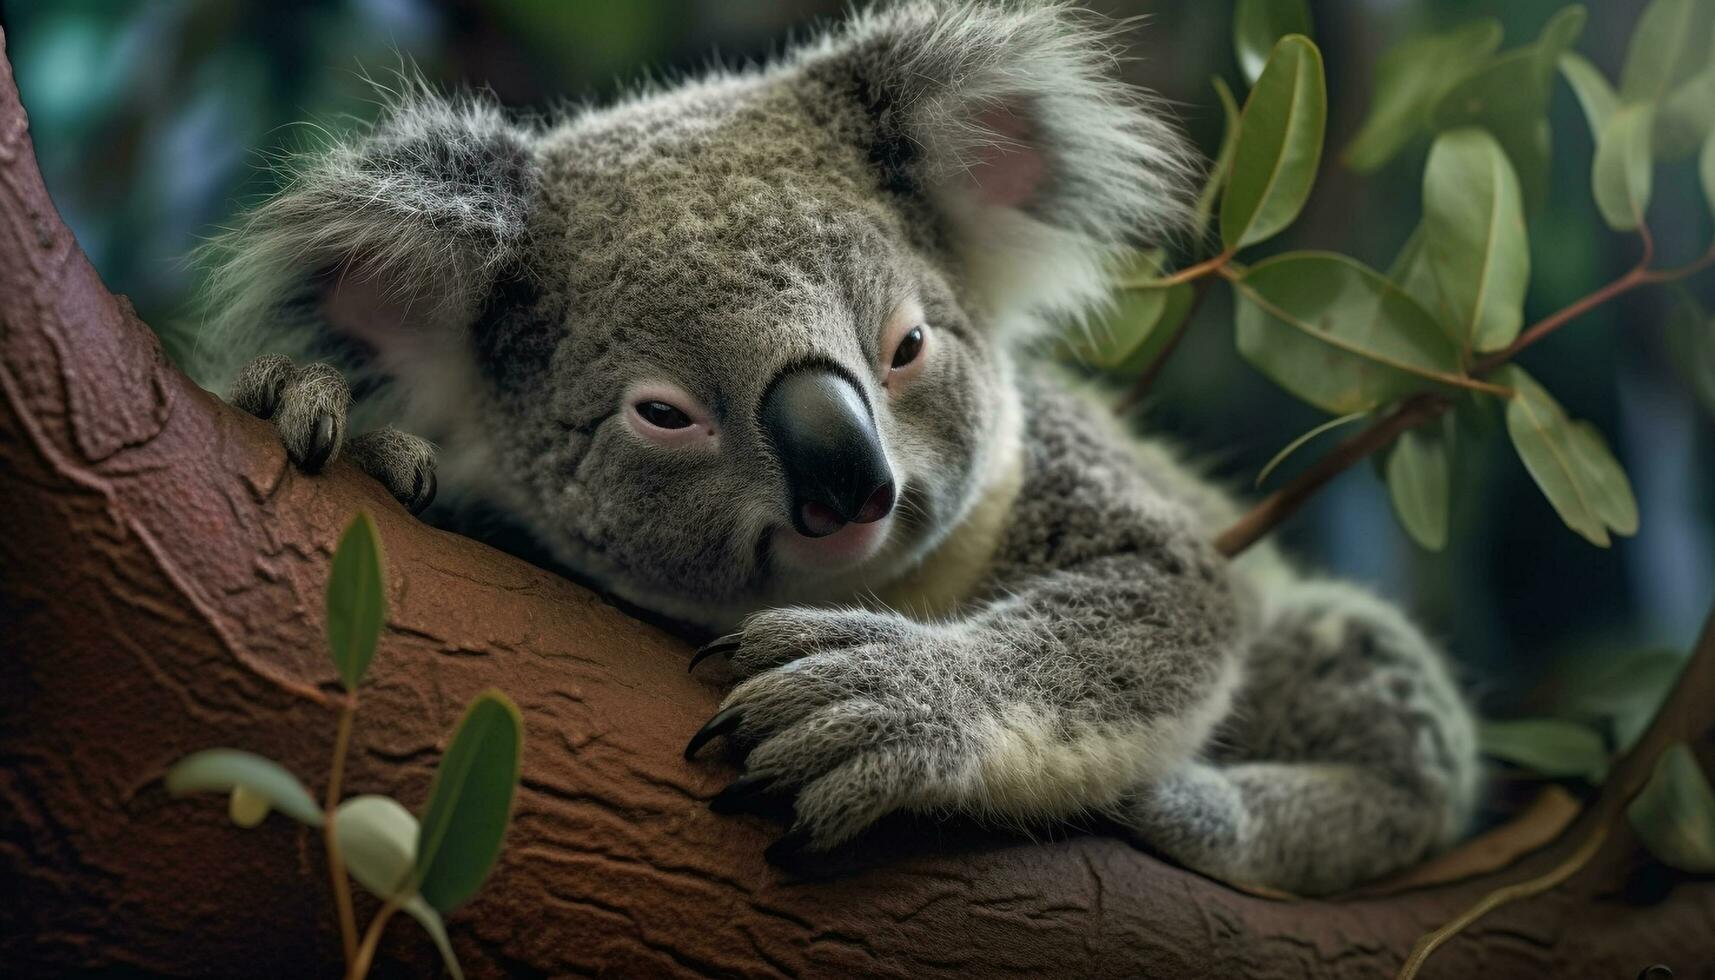 Cute koala, marsupial mammal, sitting on eucalyptus tree, looking at camera generated by AI photo